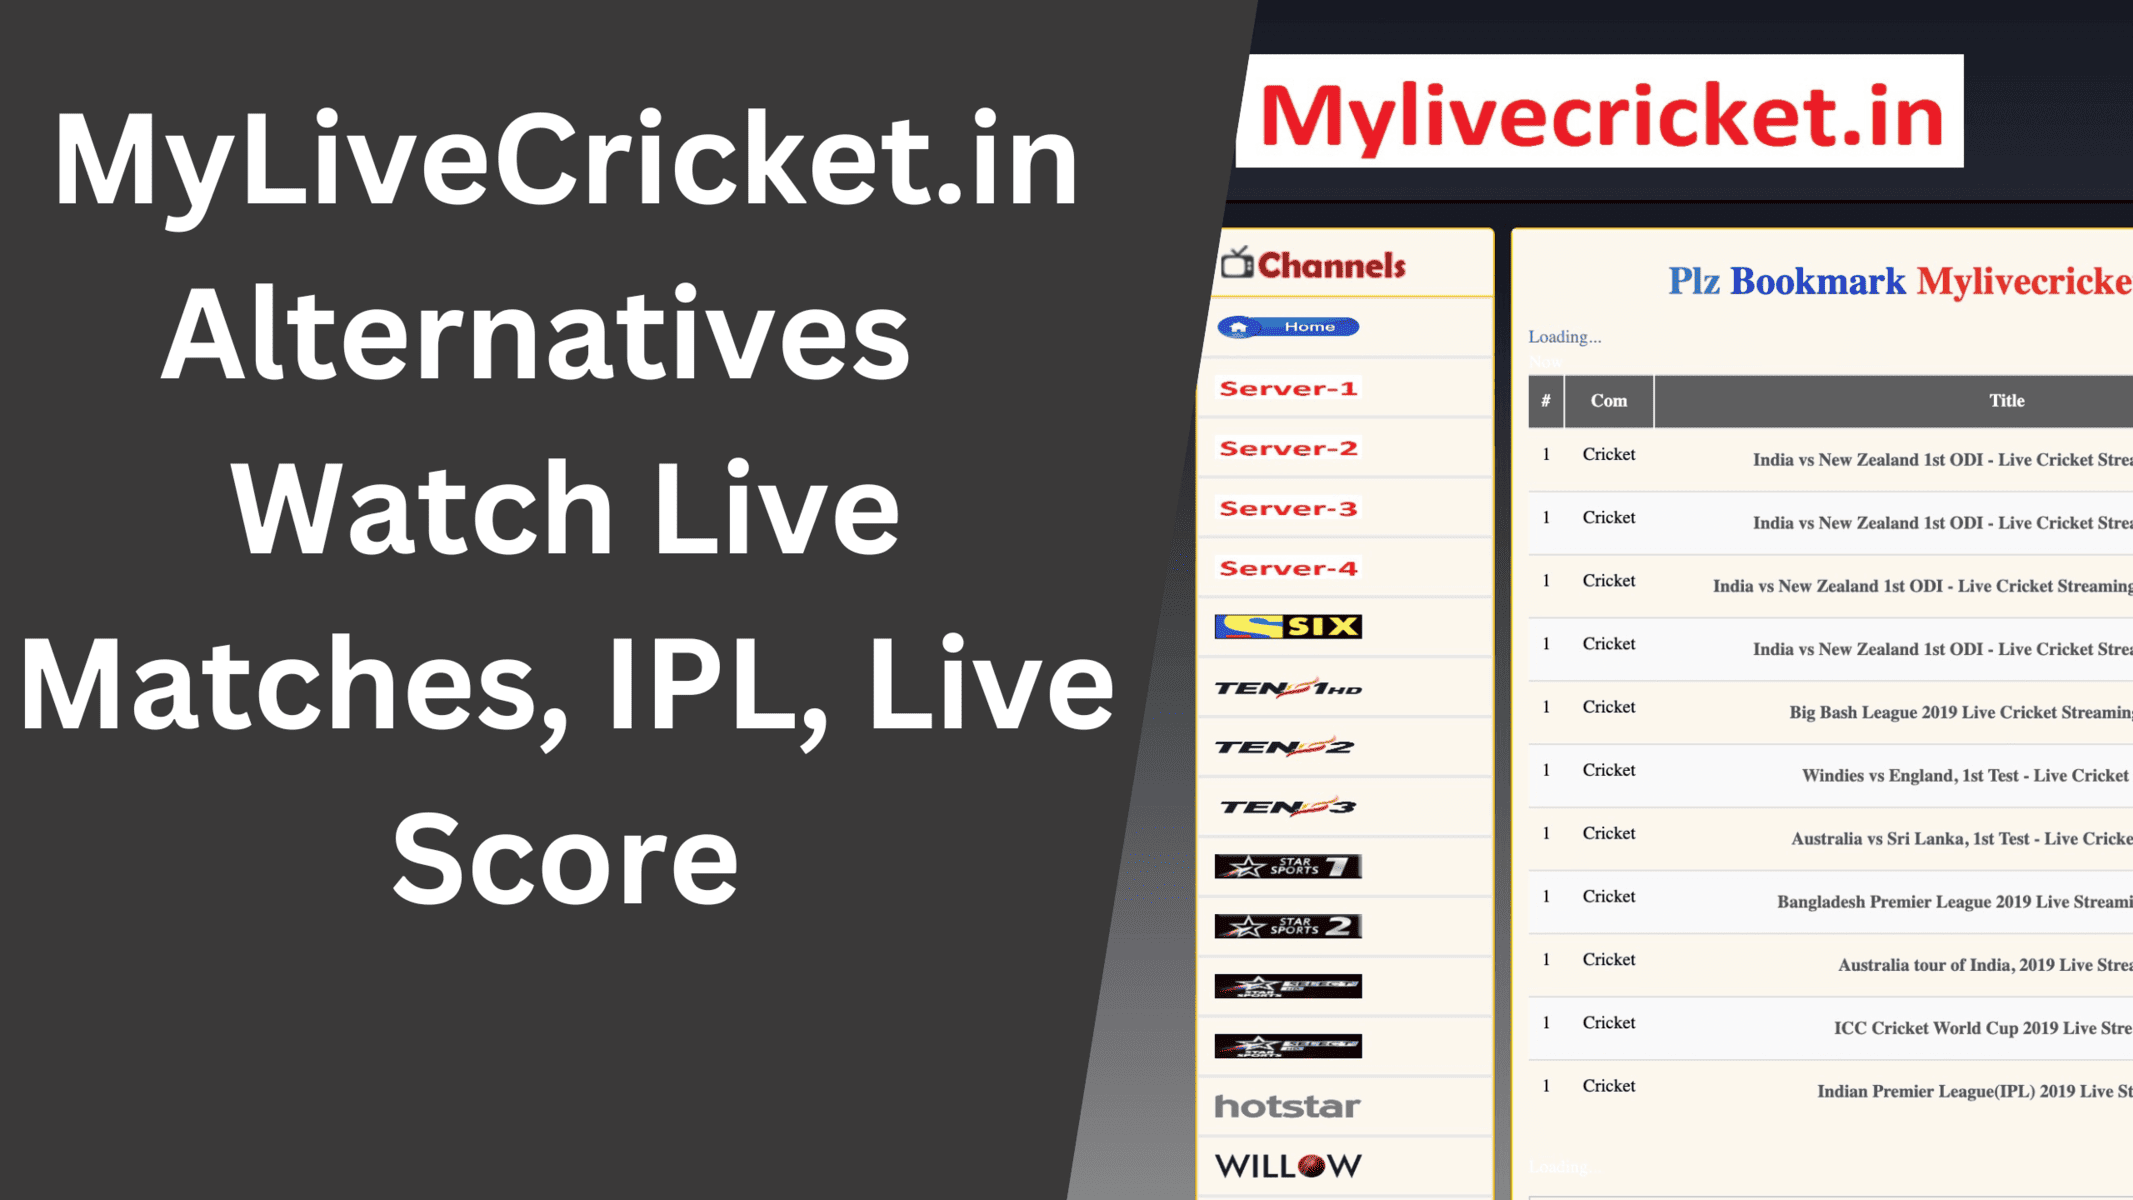 MyLiveCricket.in Alternatives Watch Live Matches, IPL, Live Score